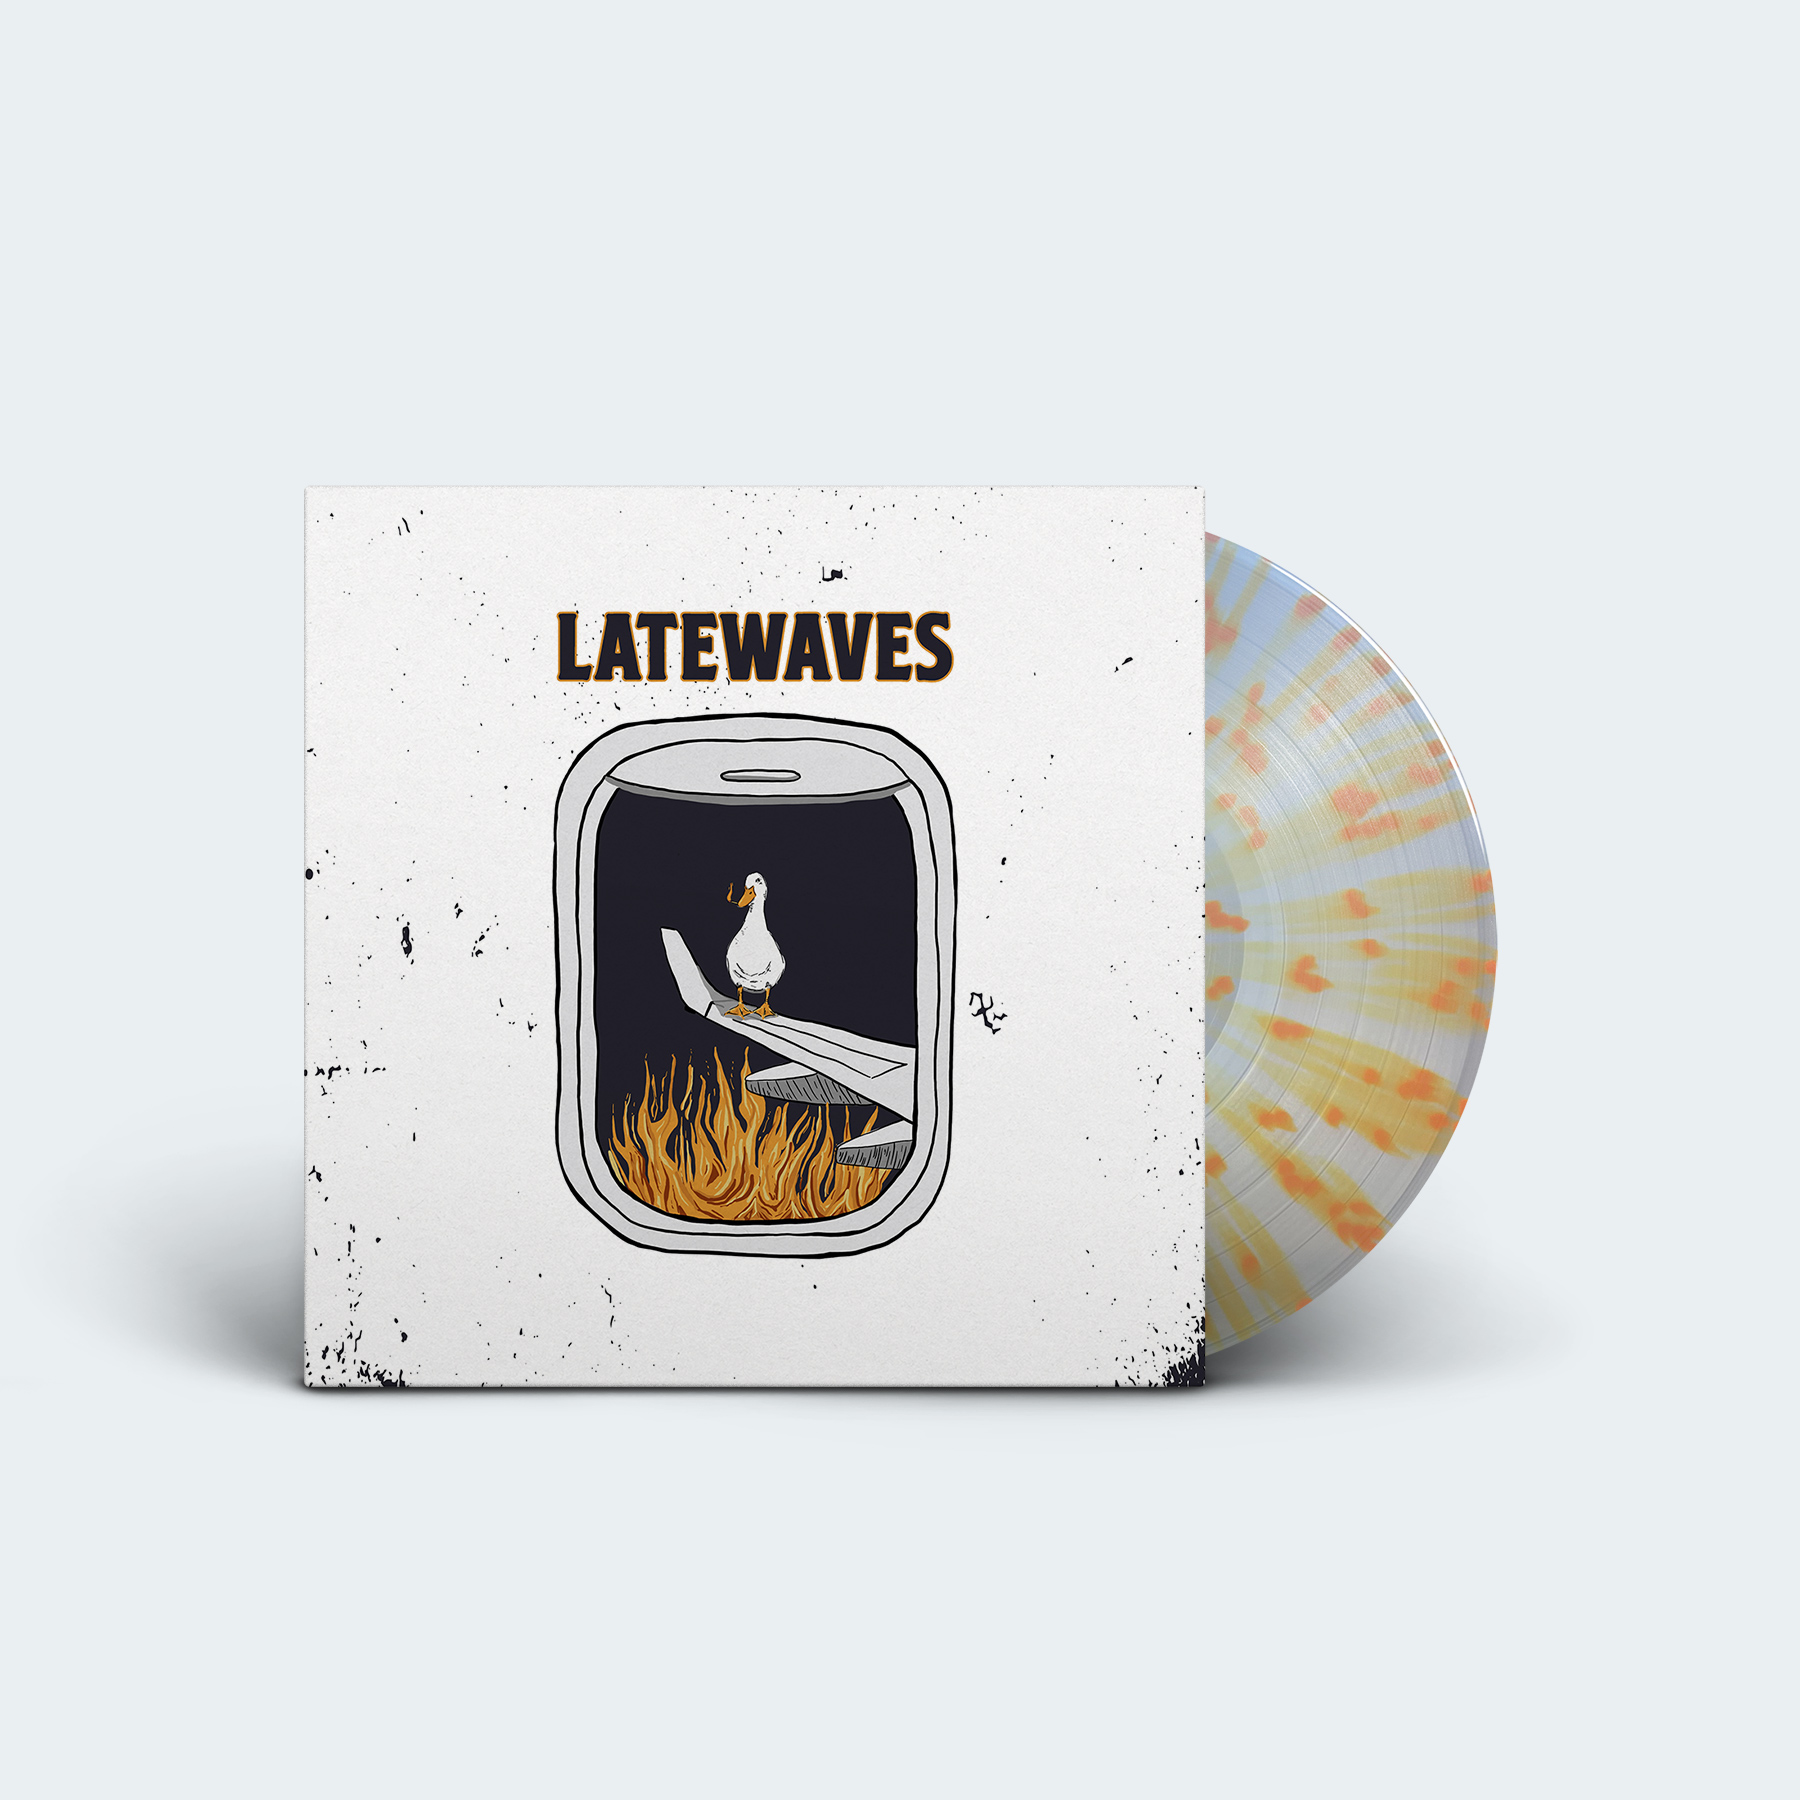 Latewaves vinyl3